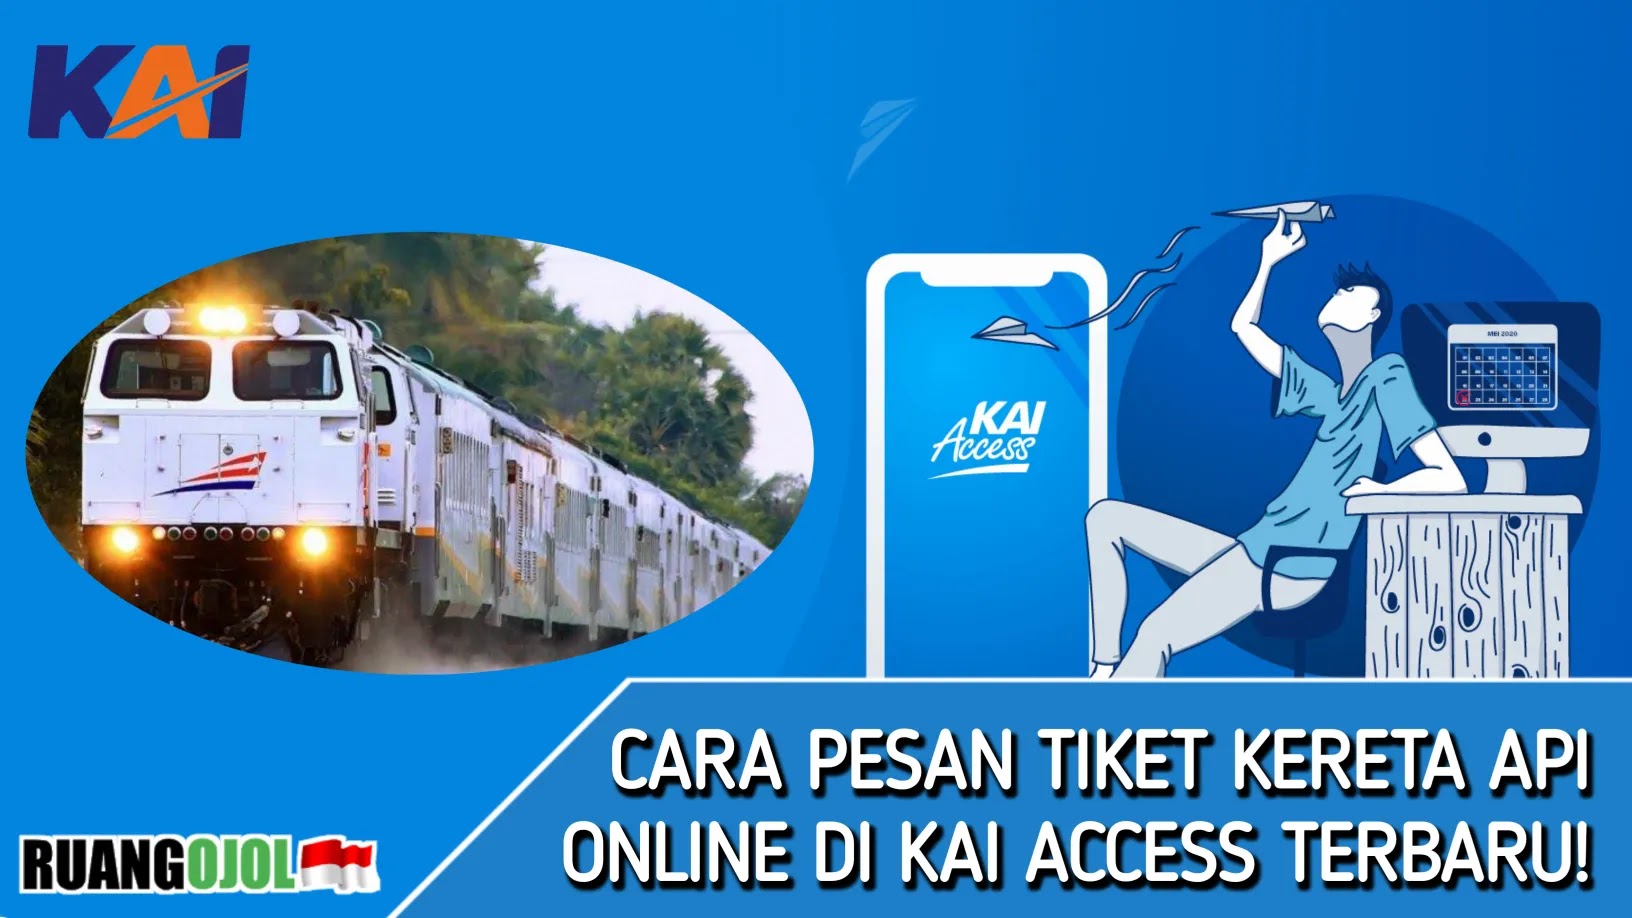 Cara pesan tiket kereta online di aplikasi